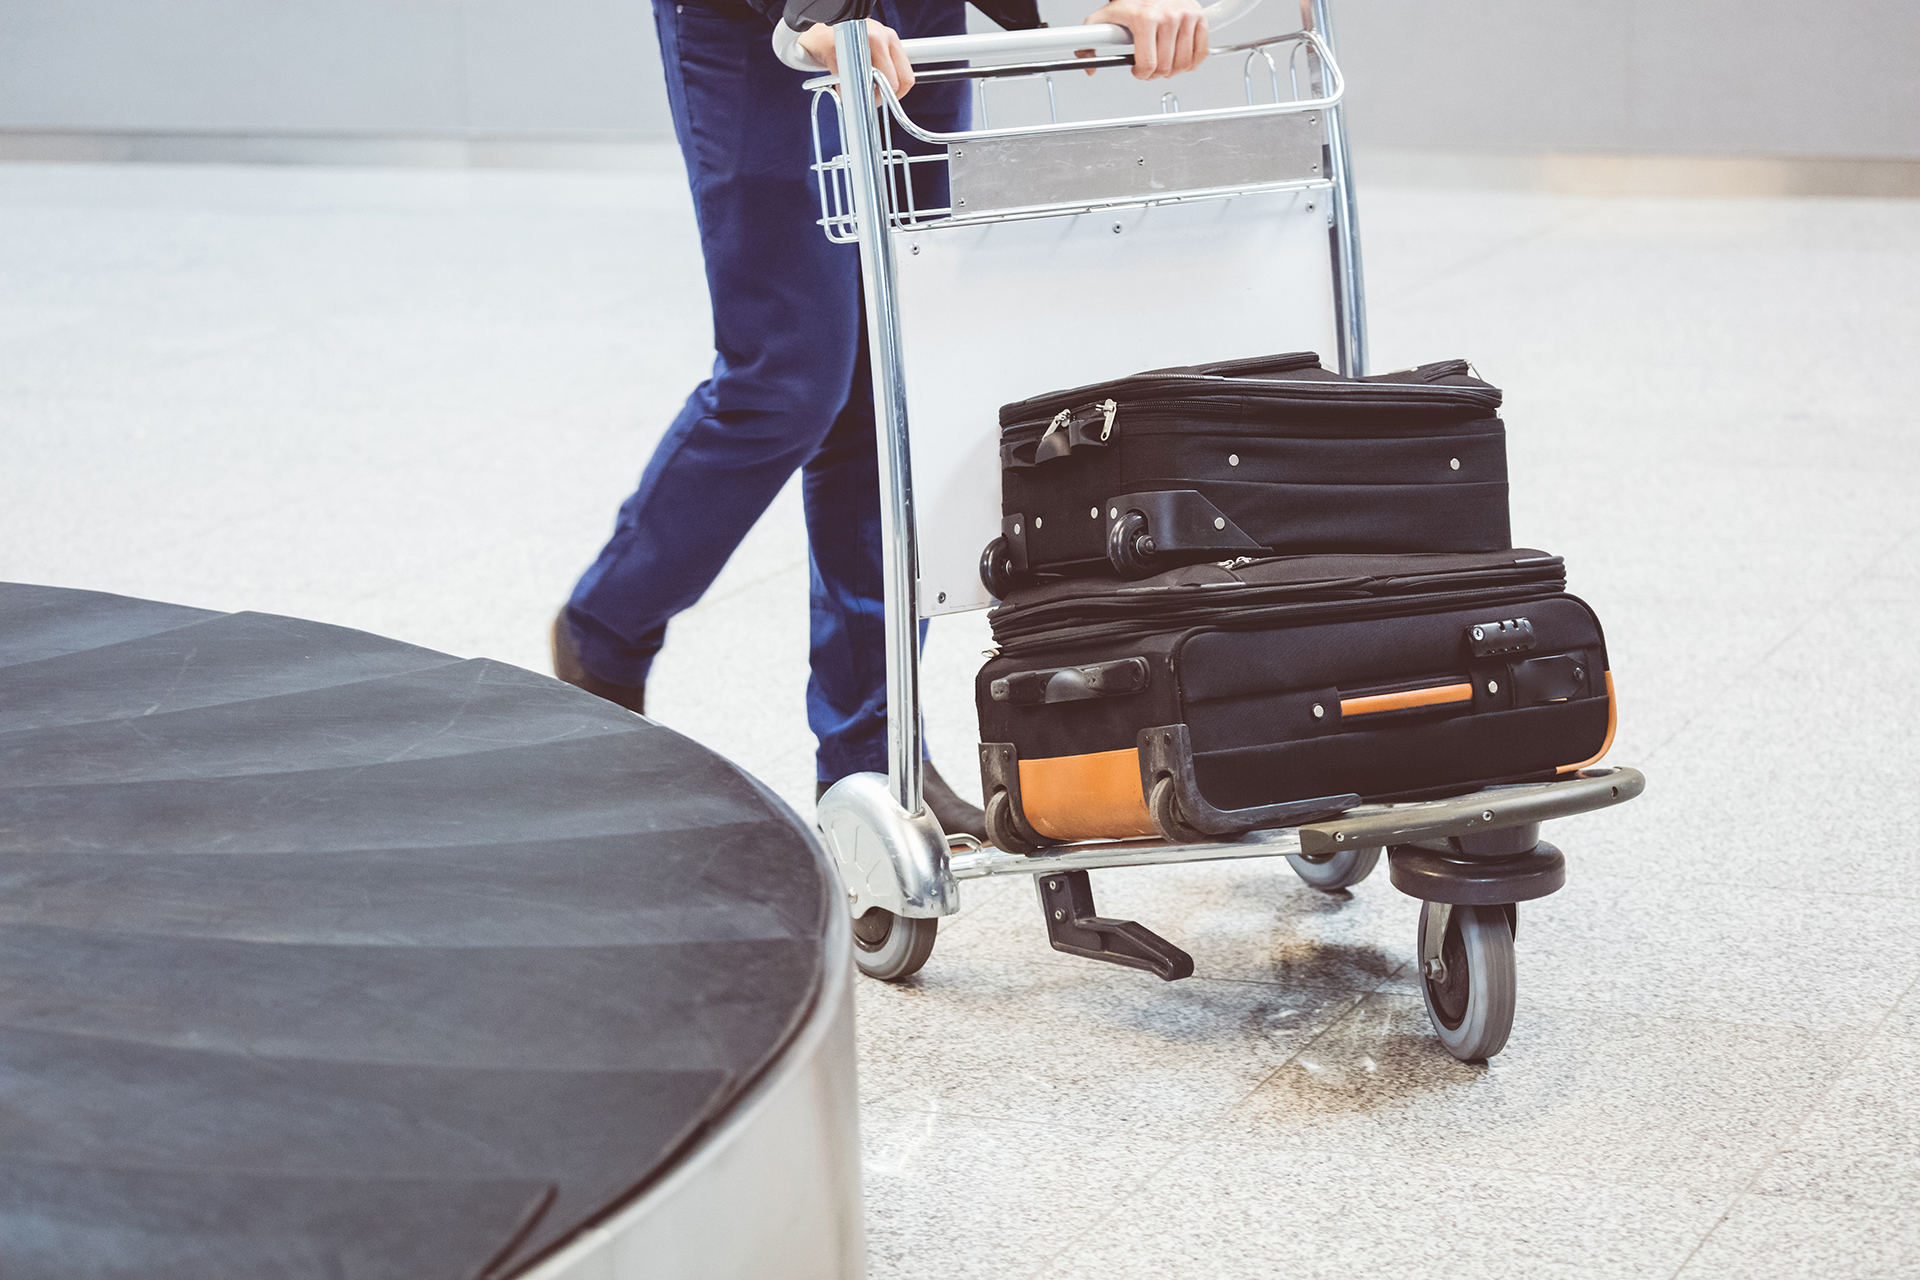 Veto da bagagem gratuita evitará saída de low costs, diz Anac